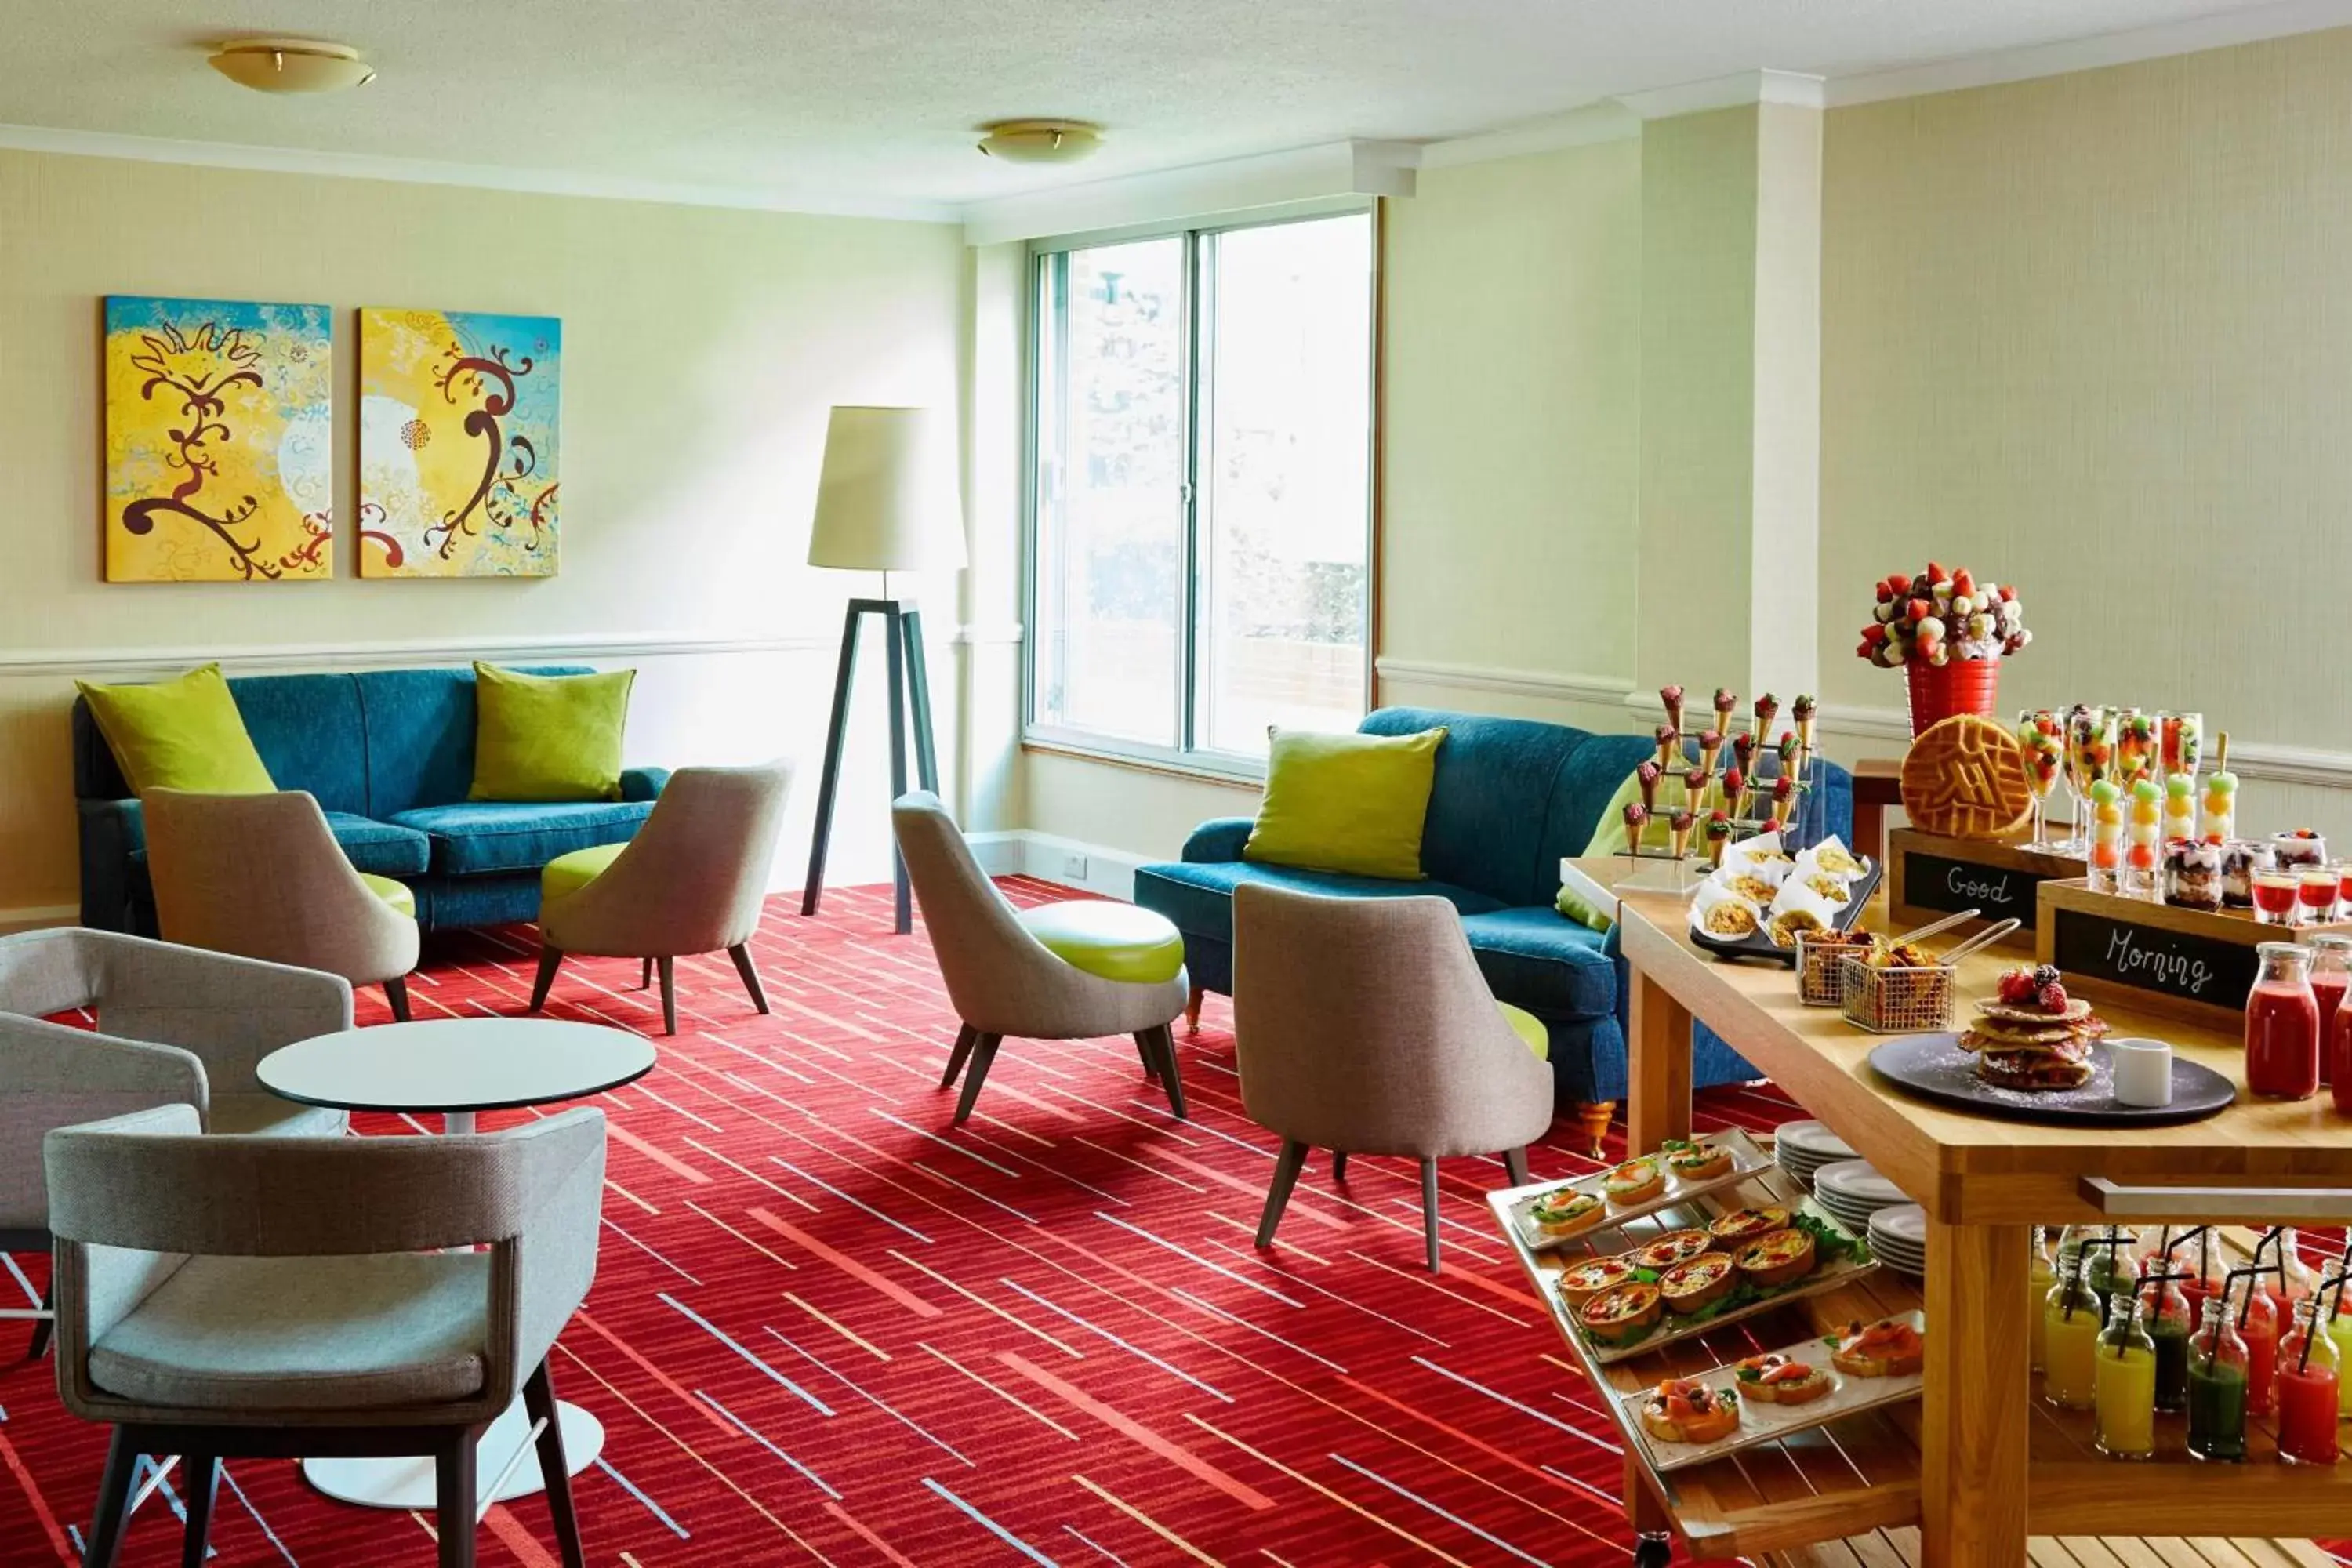 Meeting/conference room in Delta Hotels by Marriott Heathrow Windsor